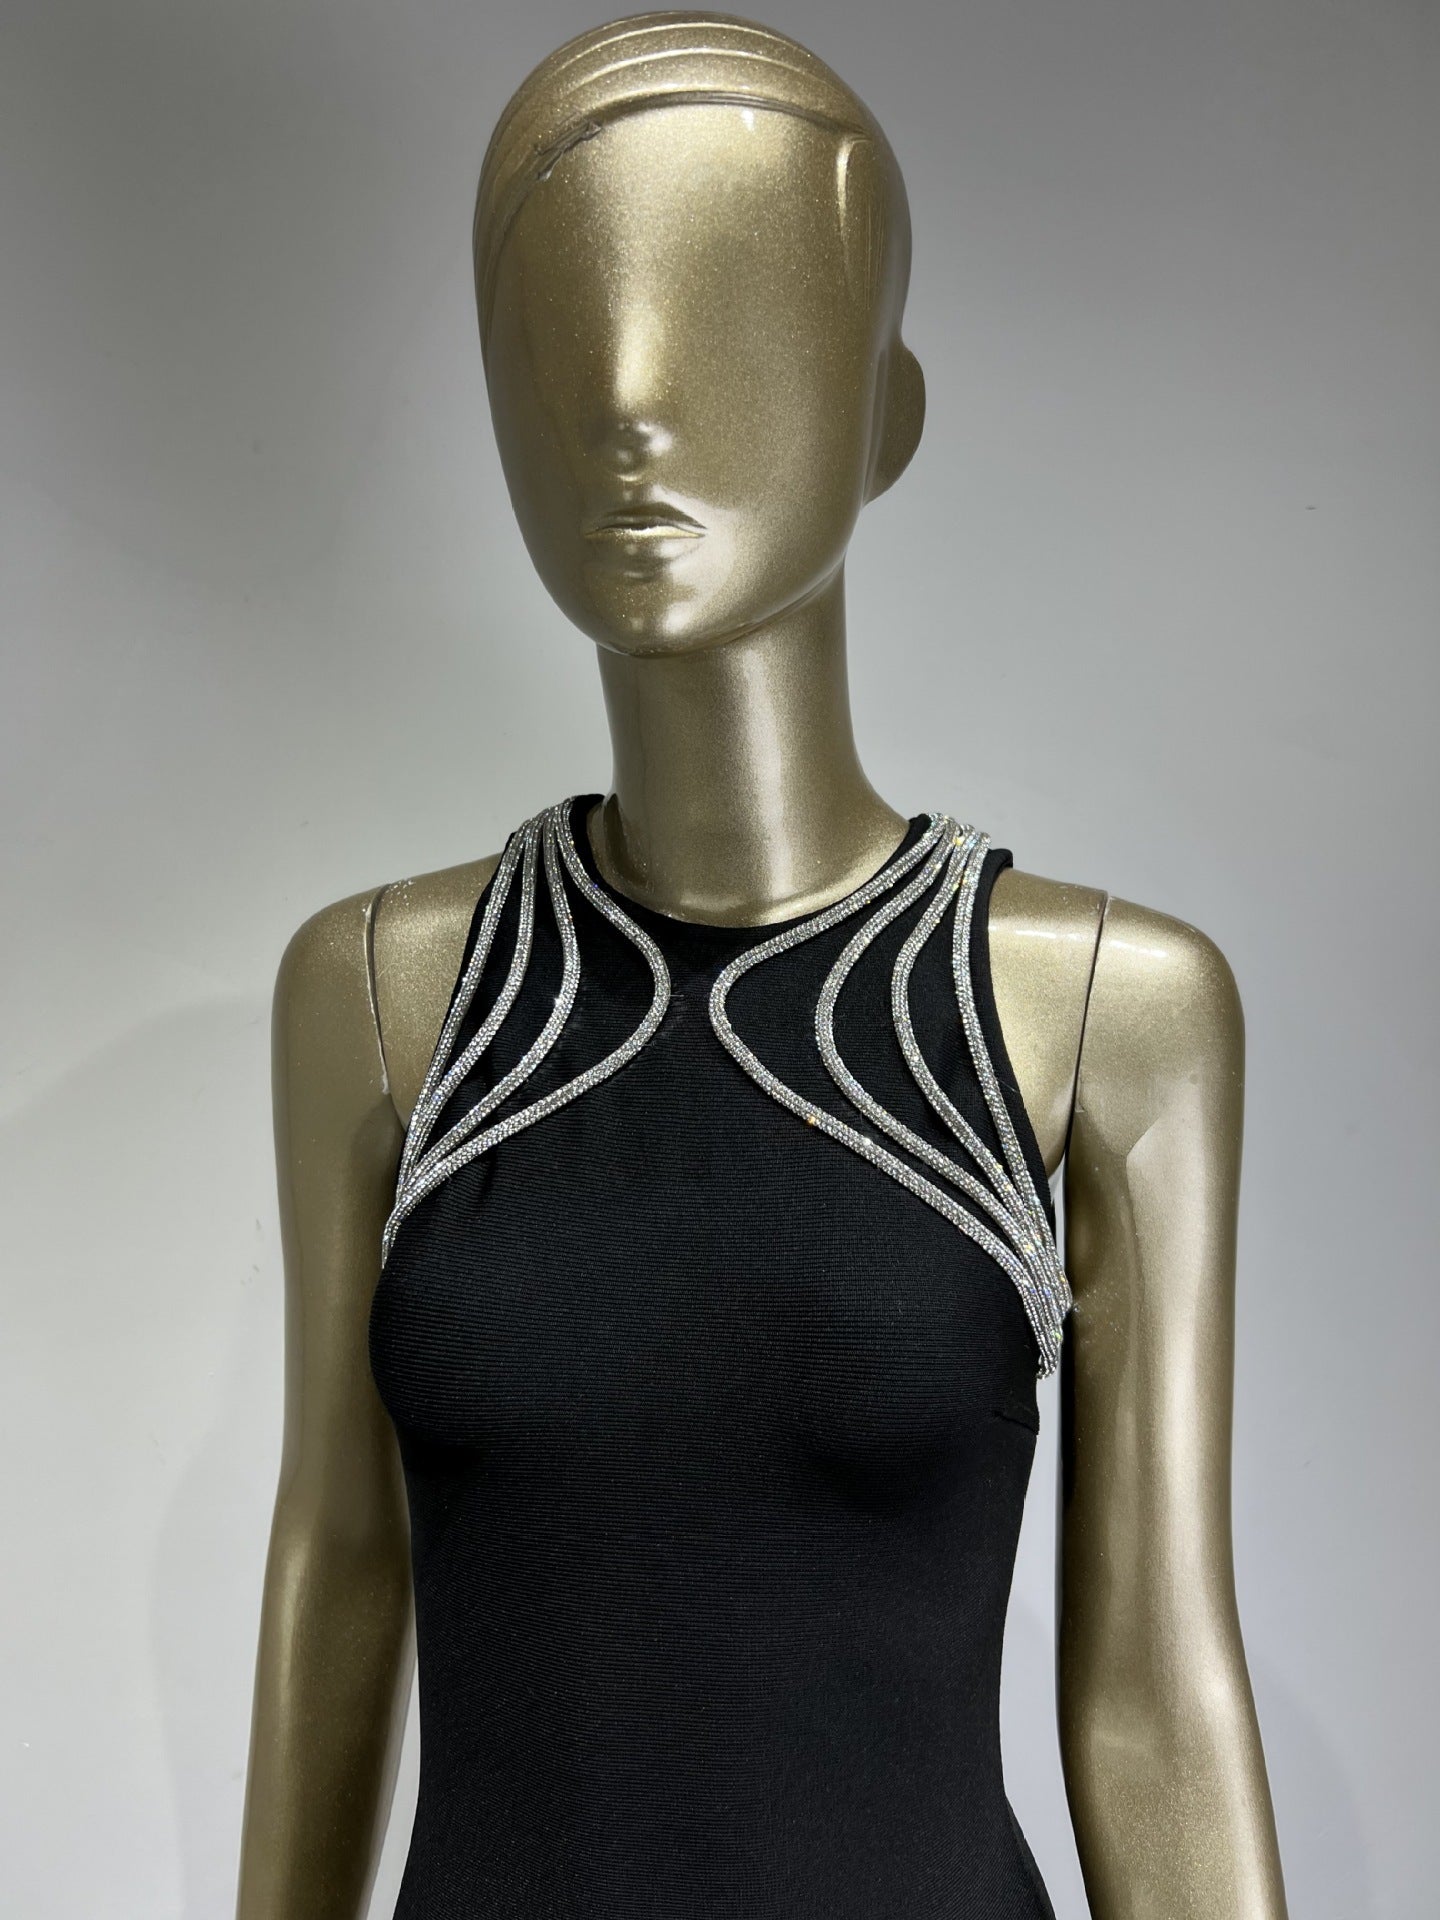 Women's Round Neck Sleeveless Drill Chain Tight Dress